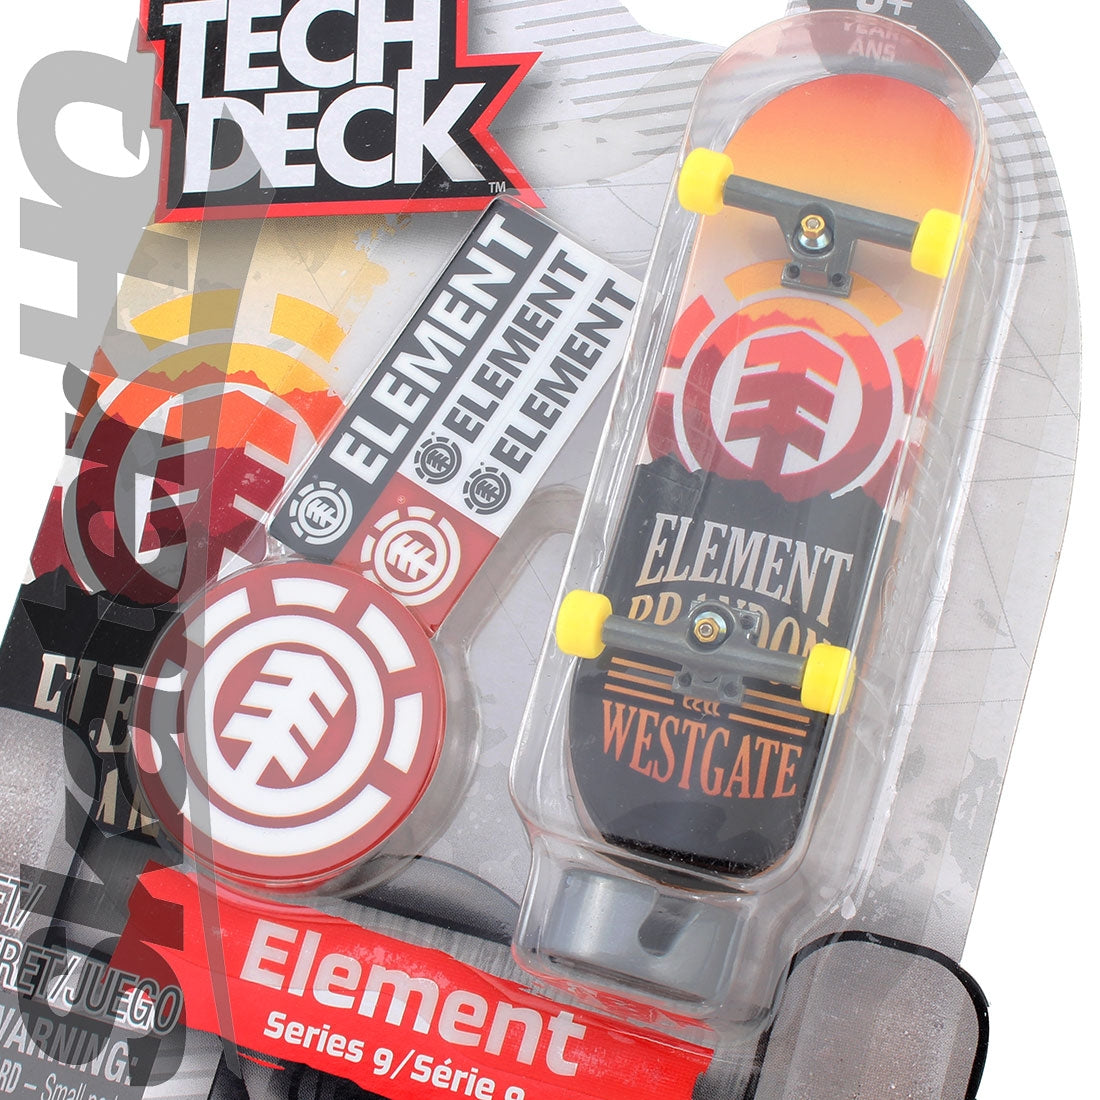 Tech Deck Series 9 - Element - Brandon Westgate